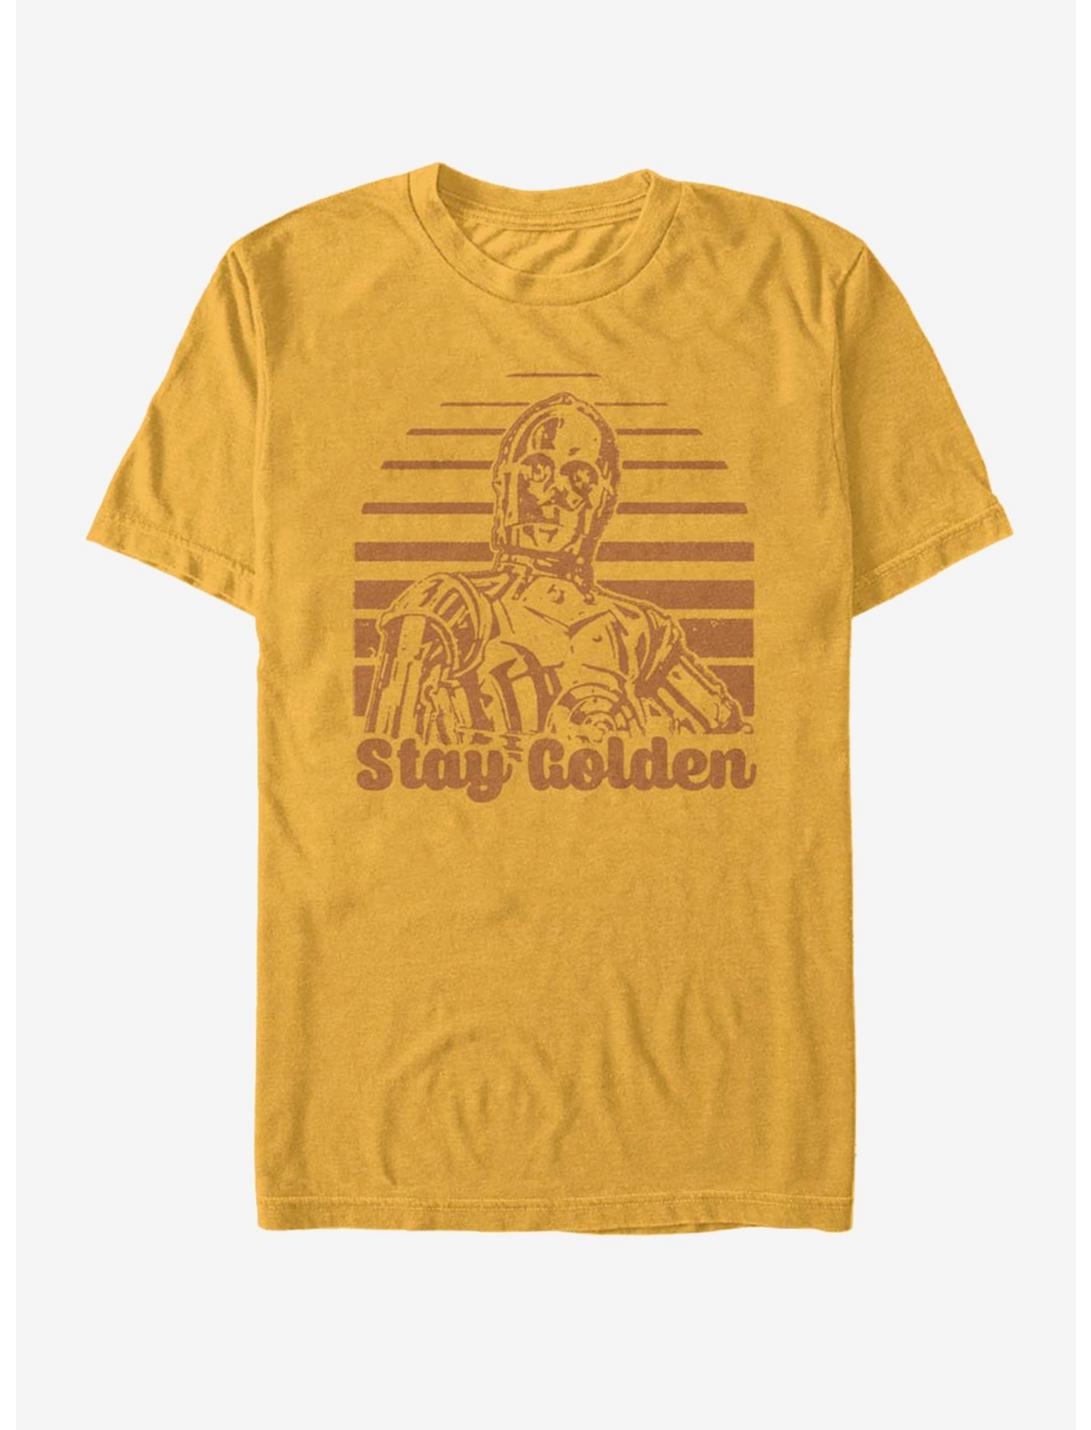 Star Wars Golden Droid T-Shirt, GOLD, hi-res